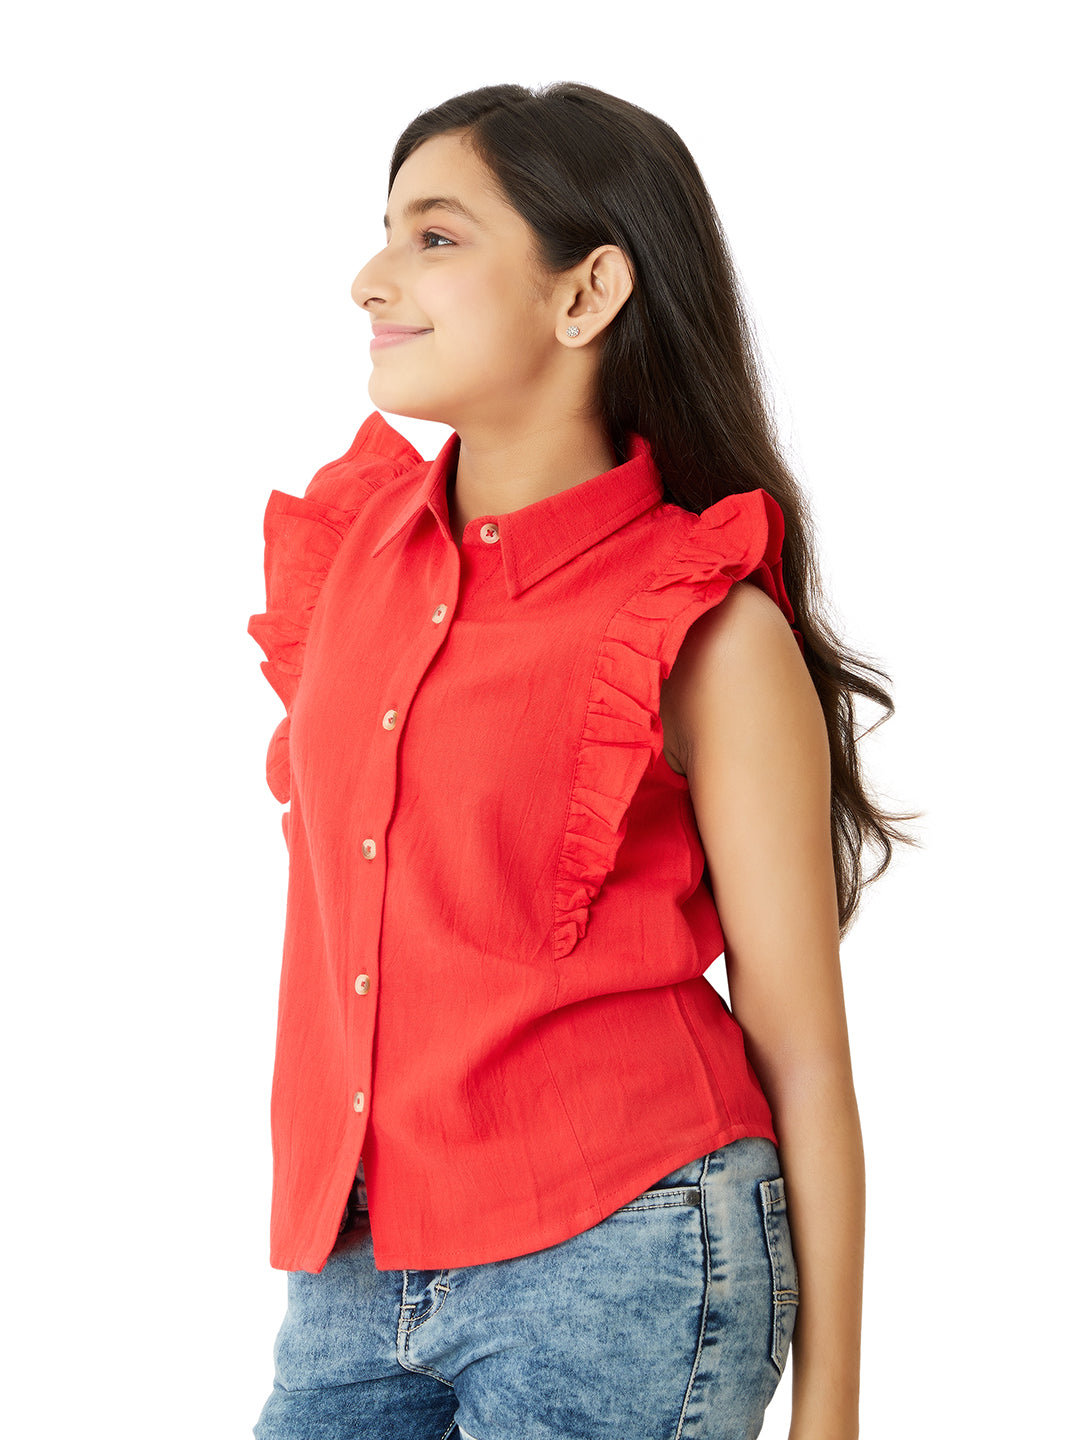 Olele® Regina Ruffle Shirt - Red Cotton Linen